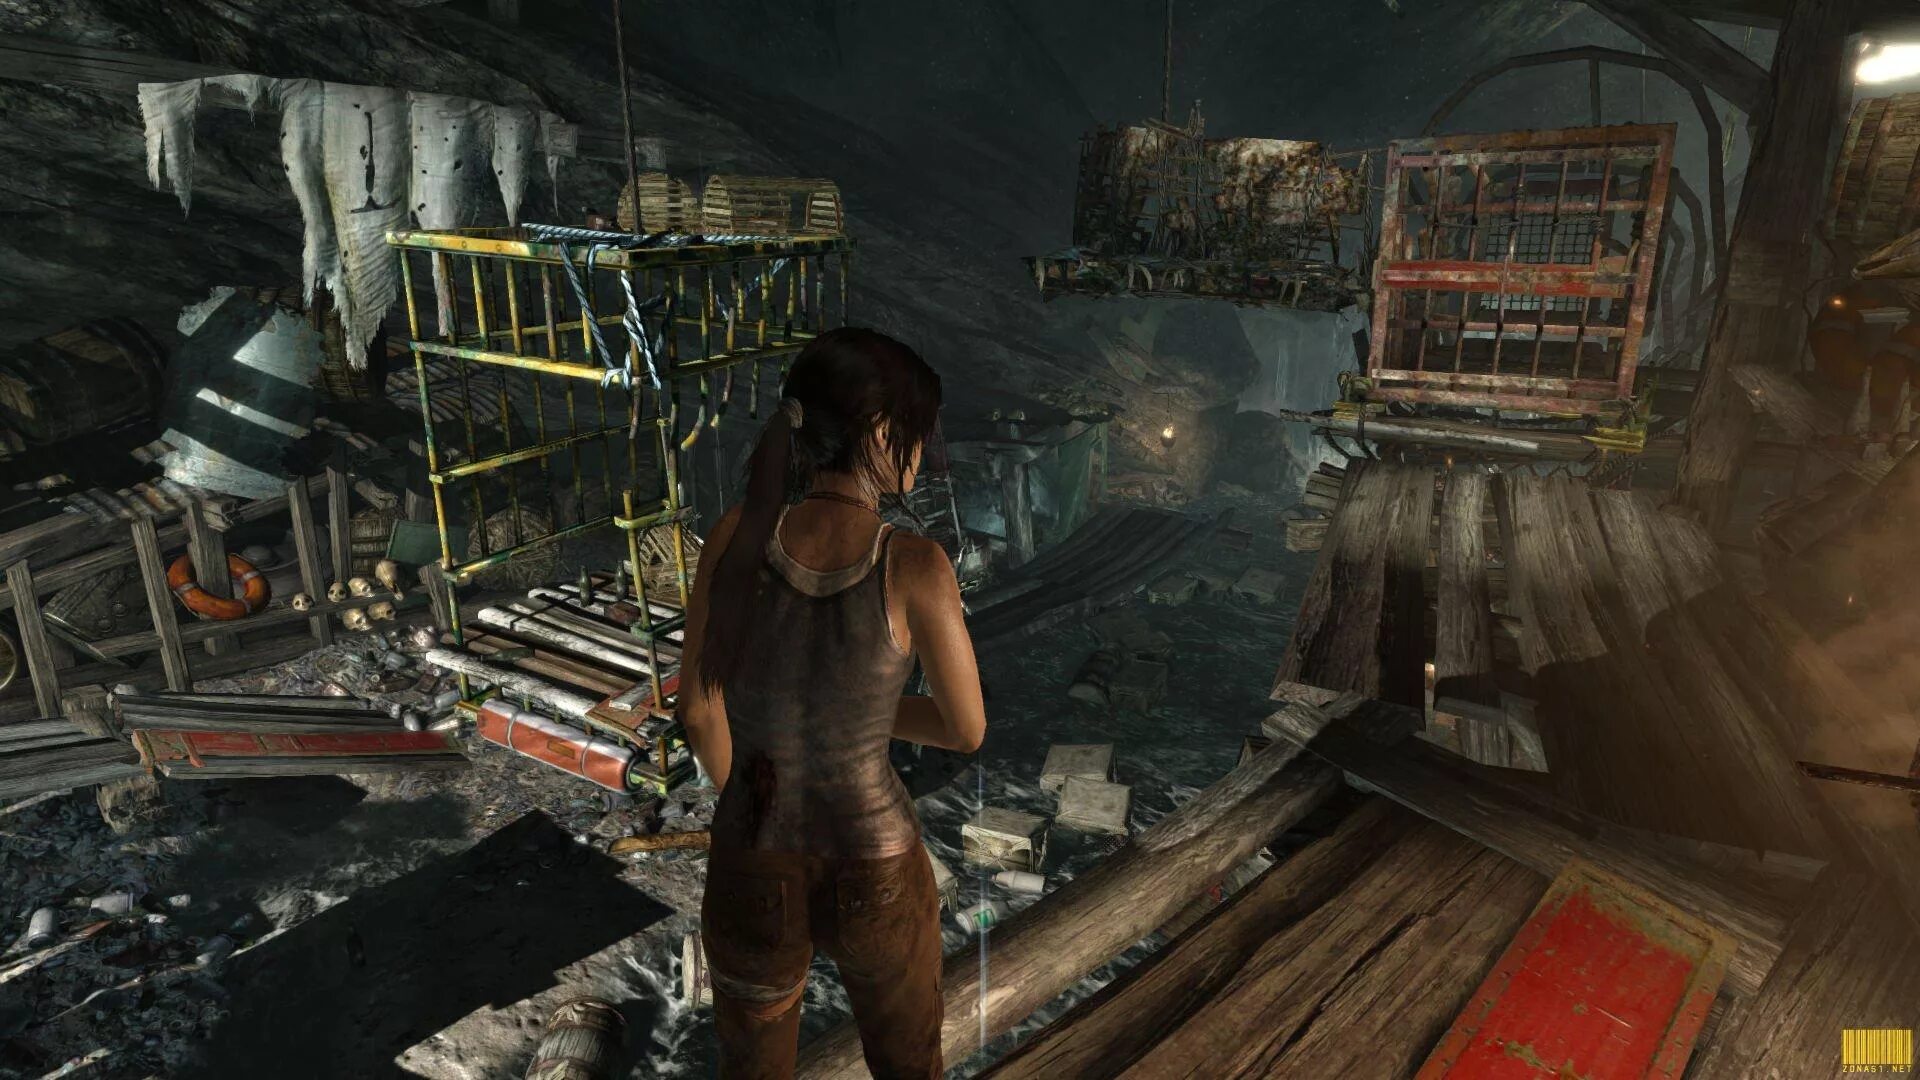 Tomb Raider игра 2013 screenshot. Томб Райдер 2013 Райдер. Томб Райдер 2013 они. Game of the year игры